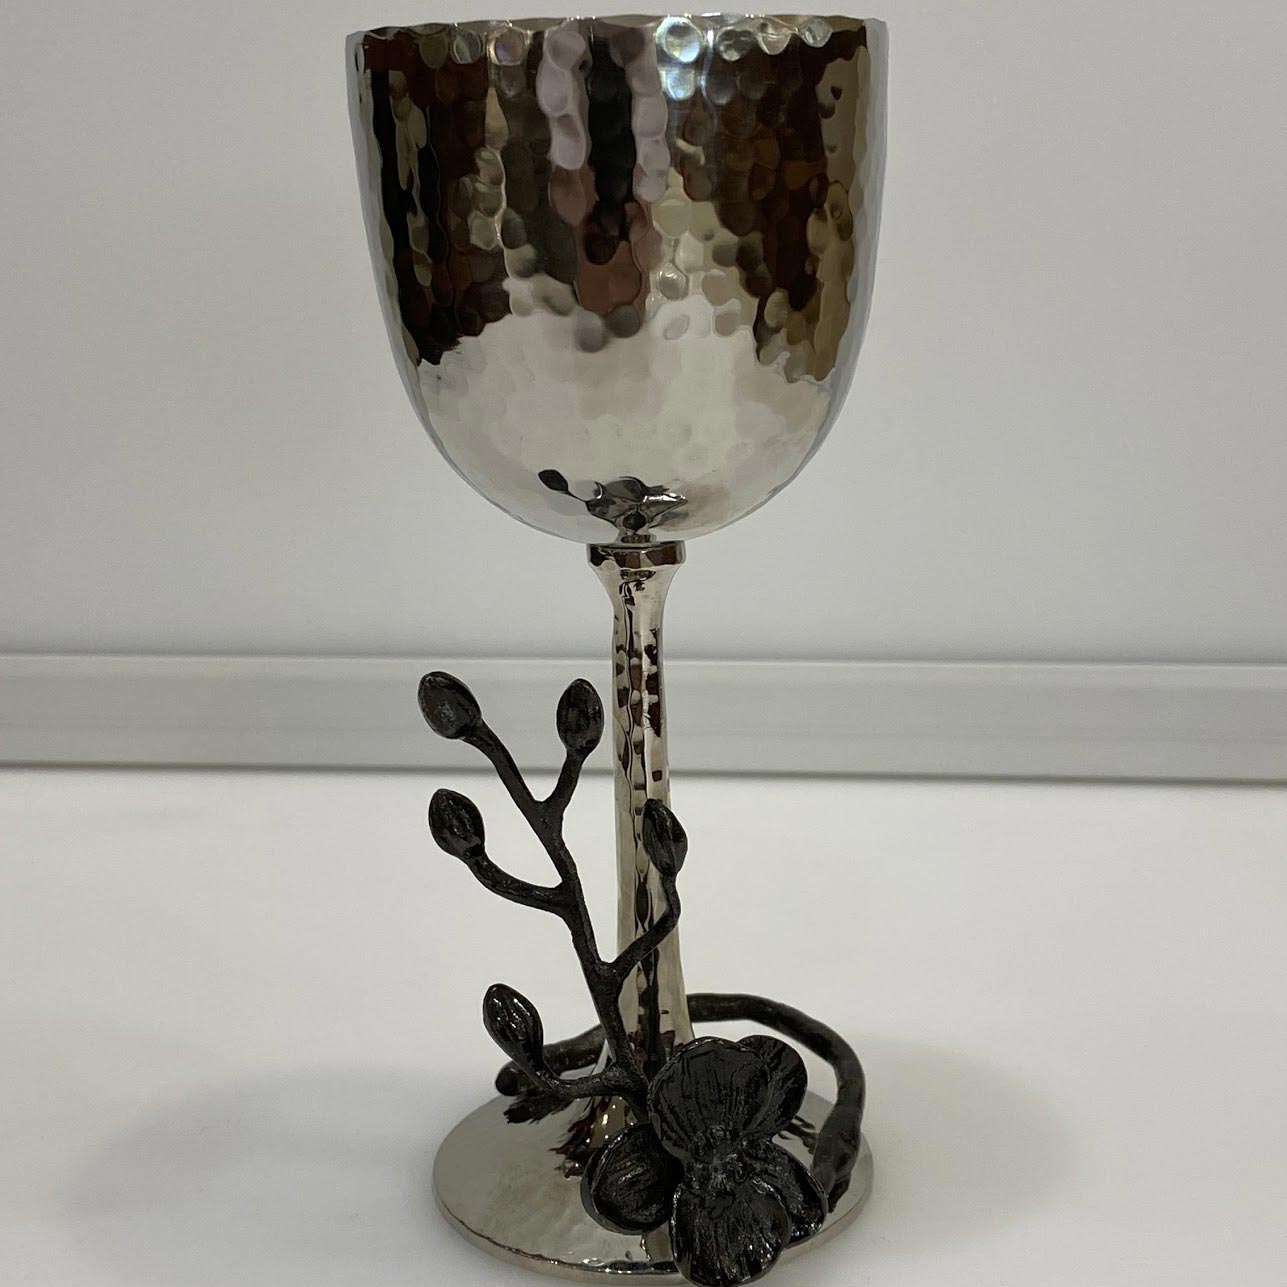 https://robertandgabriel.com/wp-content/uploads/2020/06/Michael-Aram-Black-Orchid-Celebration-Cup.jpg